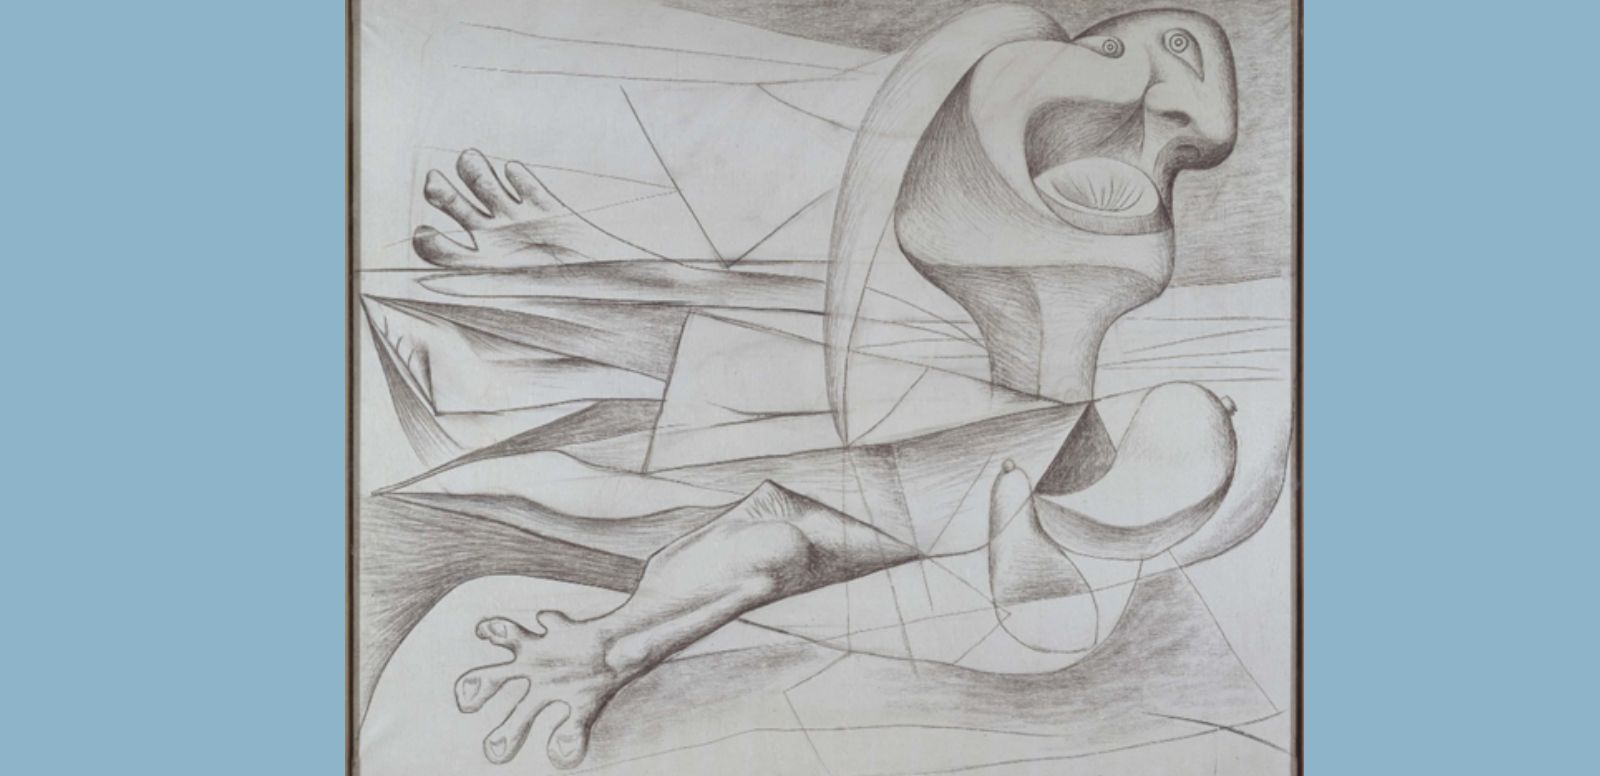 Pablo Picasso, "La nageuse", 1934